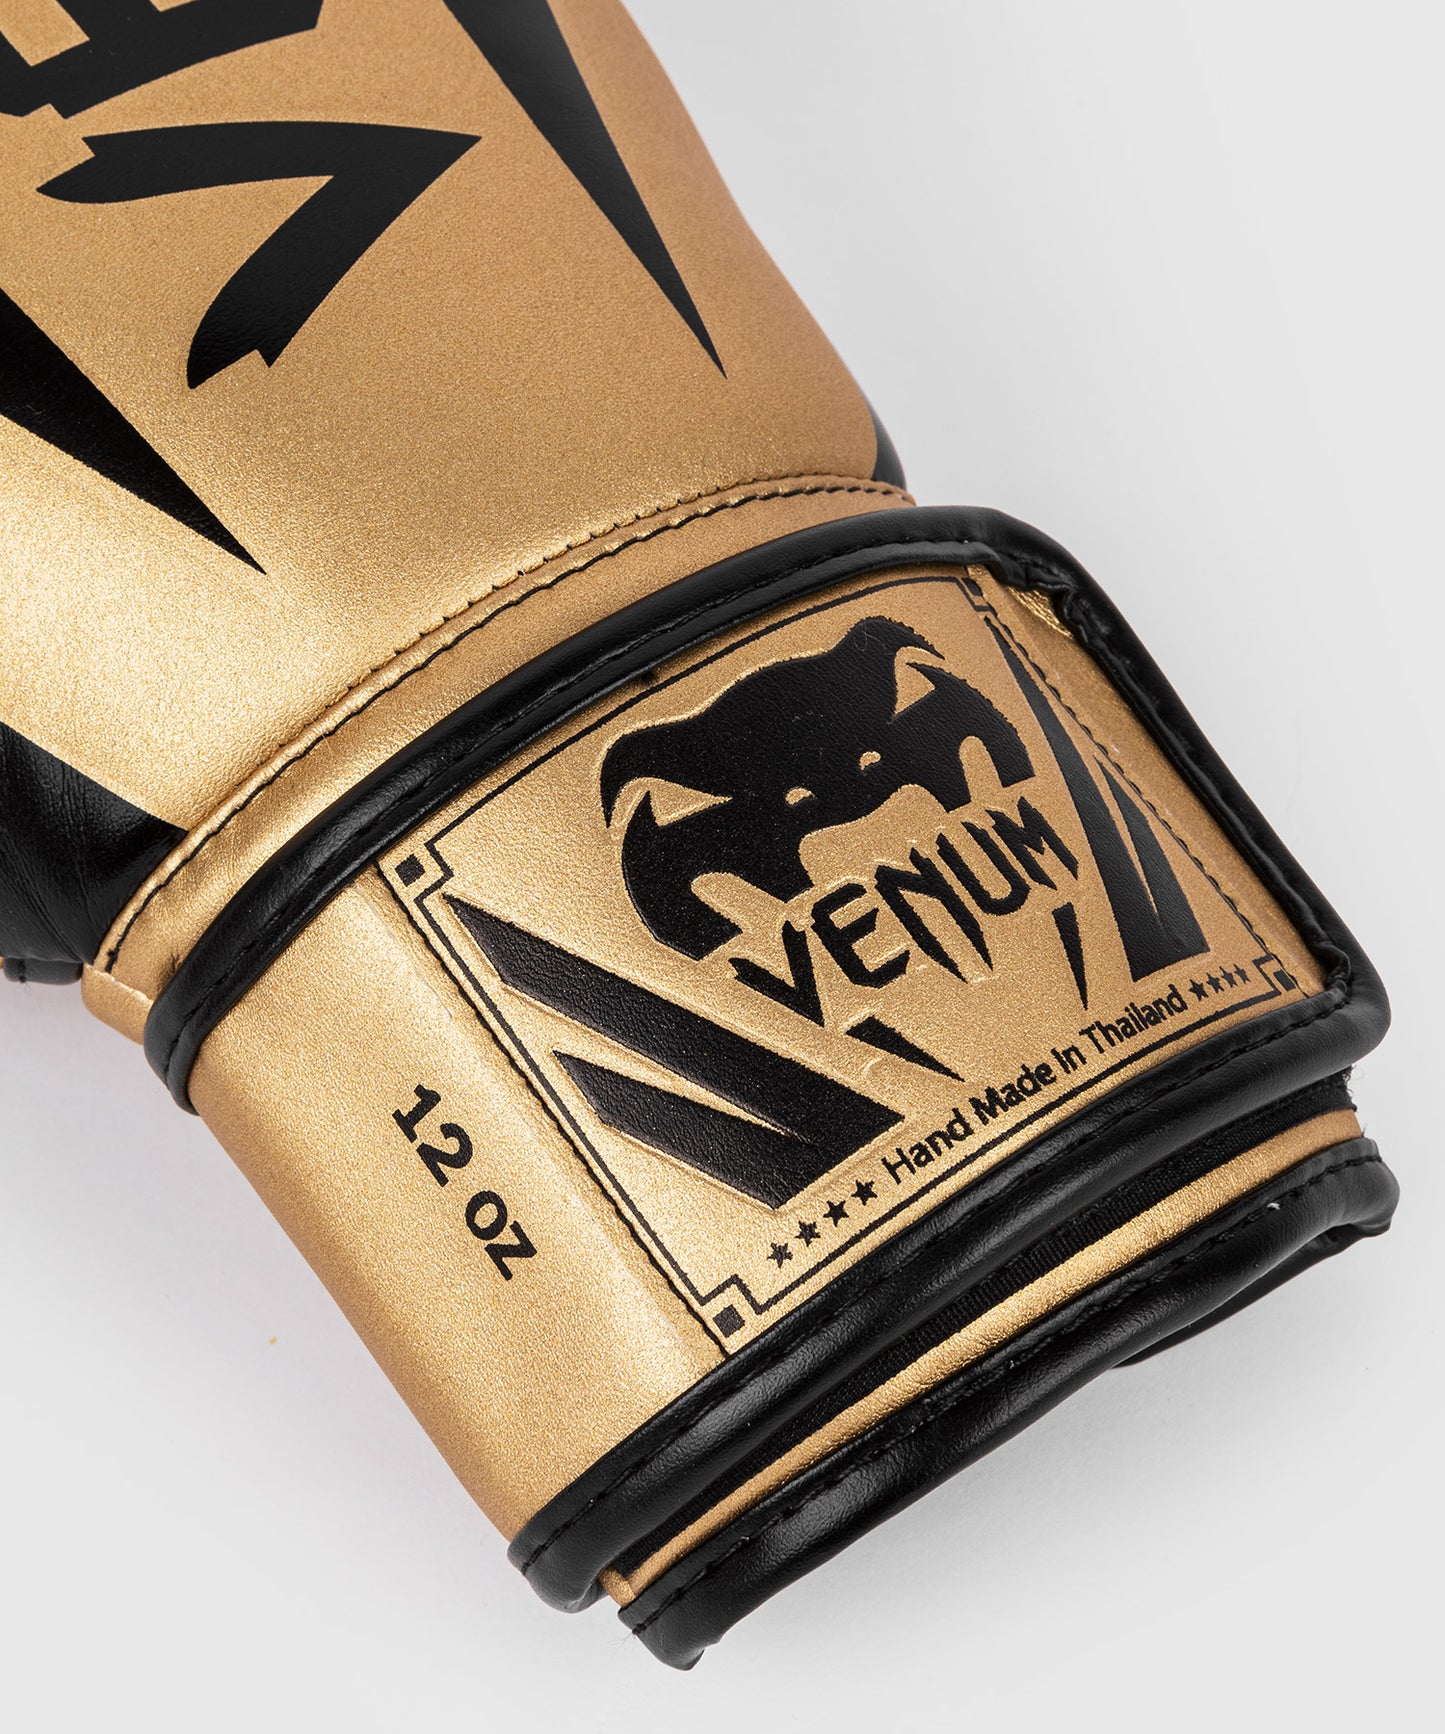 Venum Elite Boxhandschuhe - Gold/Schwarz